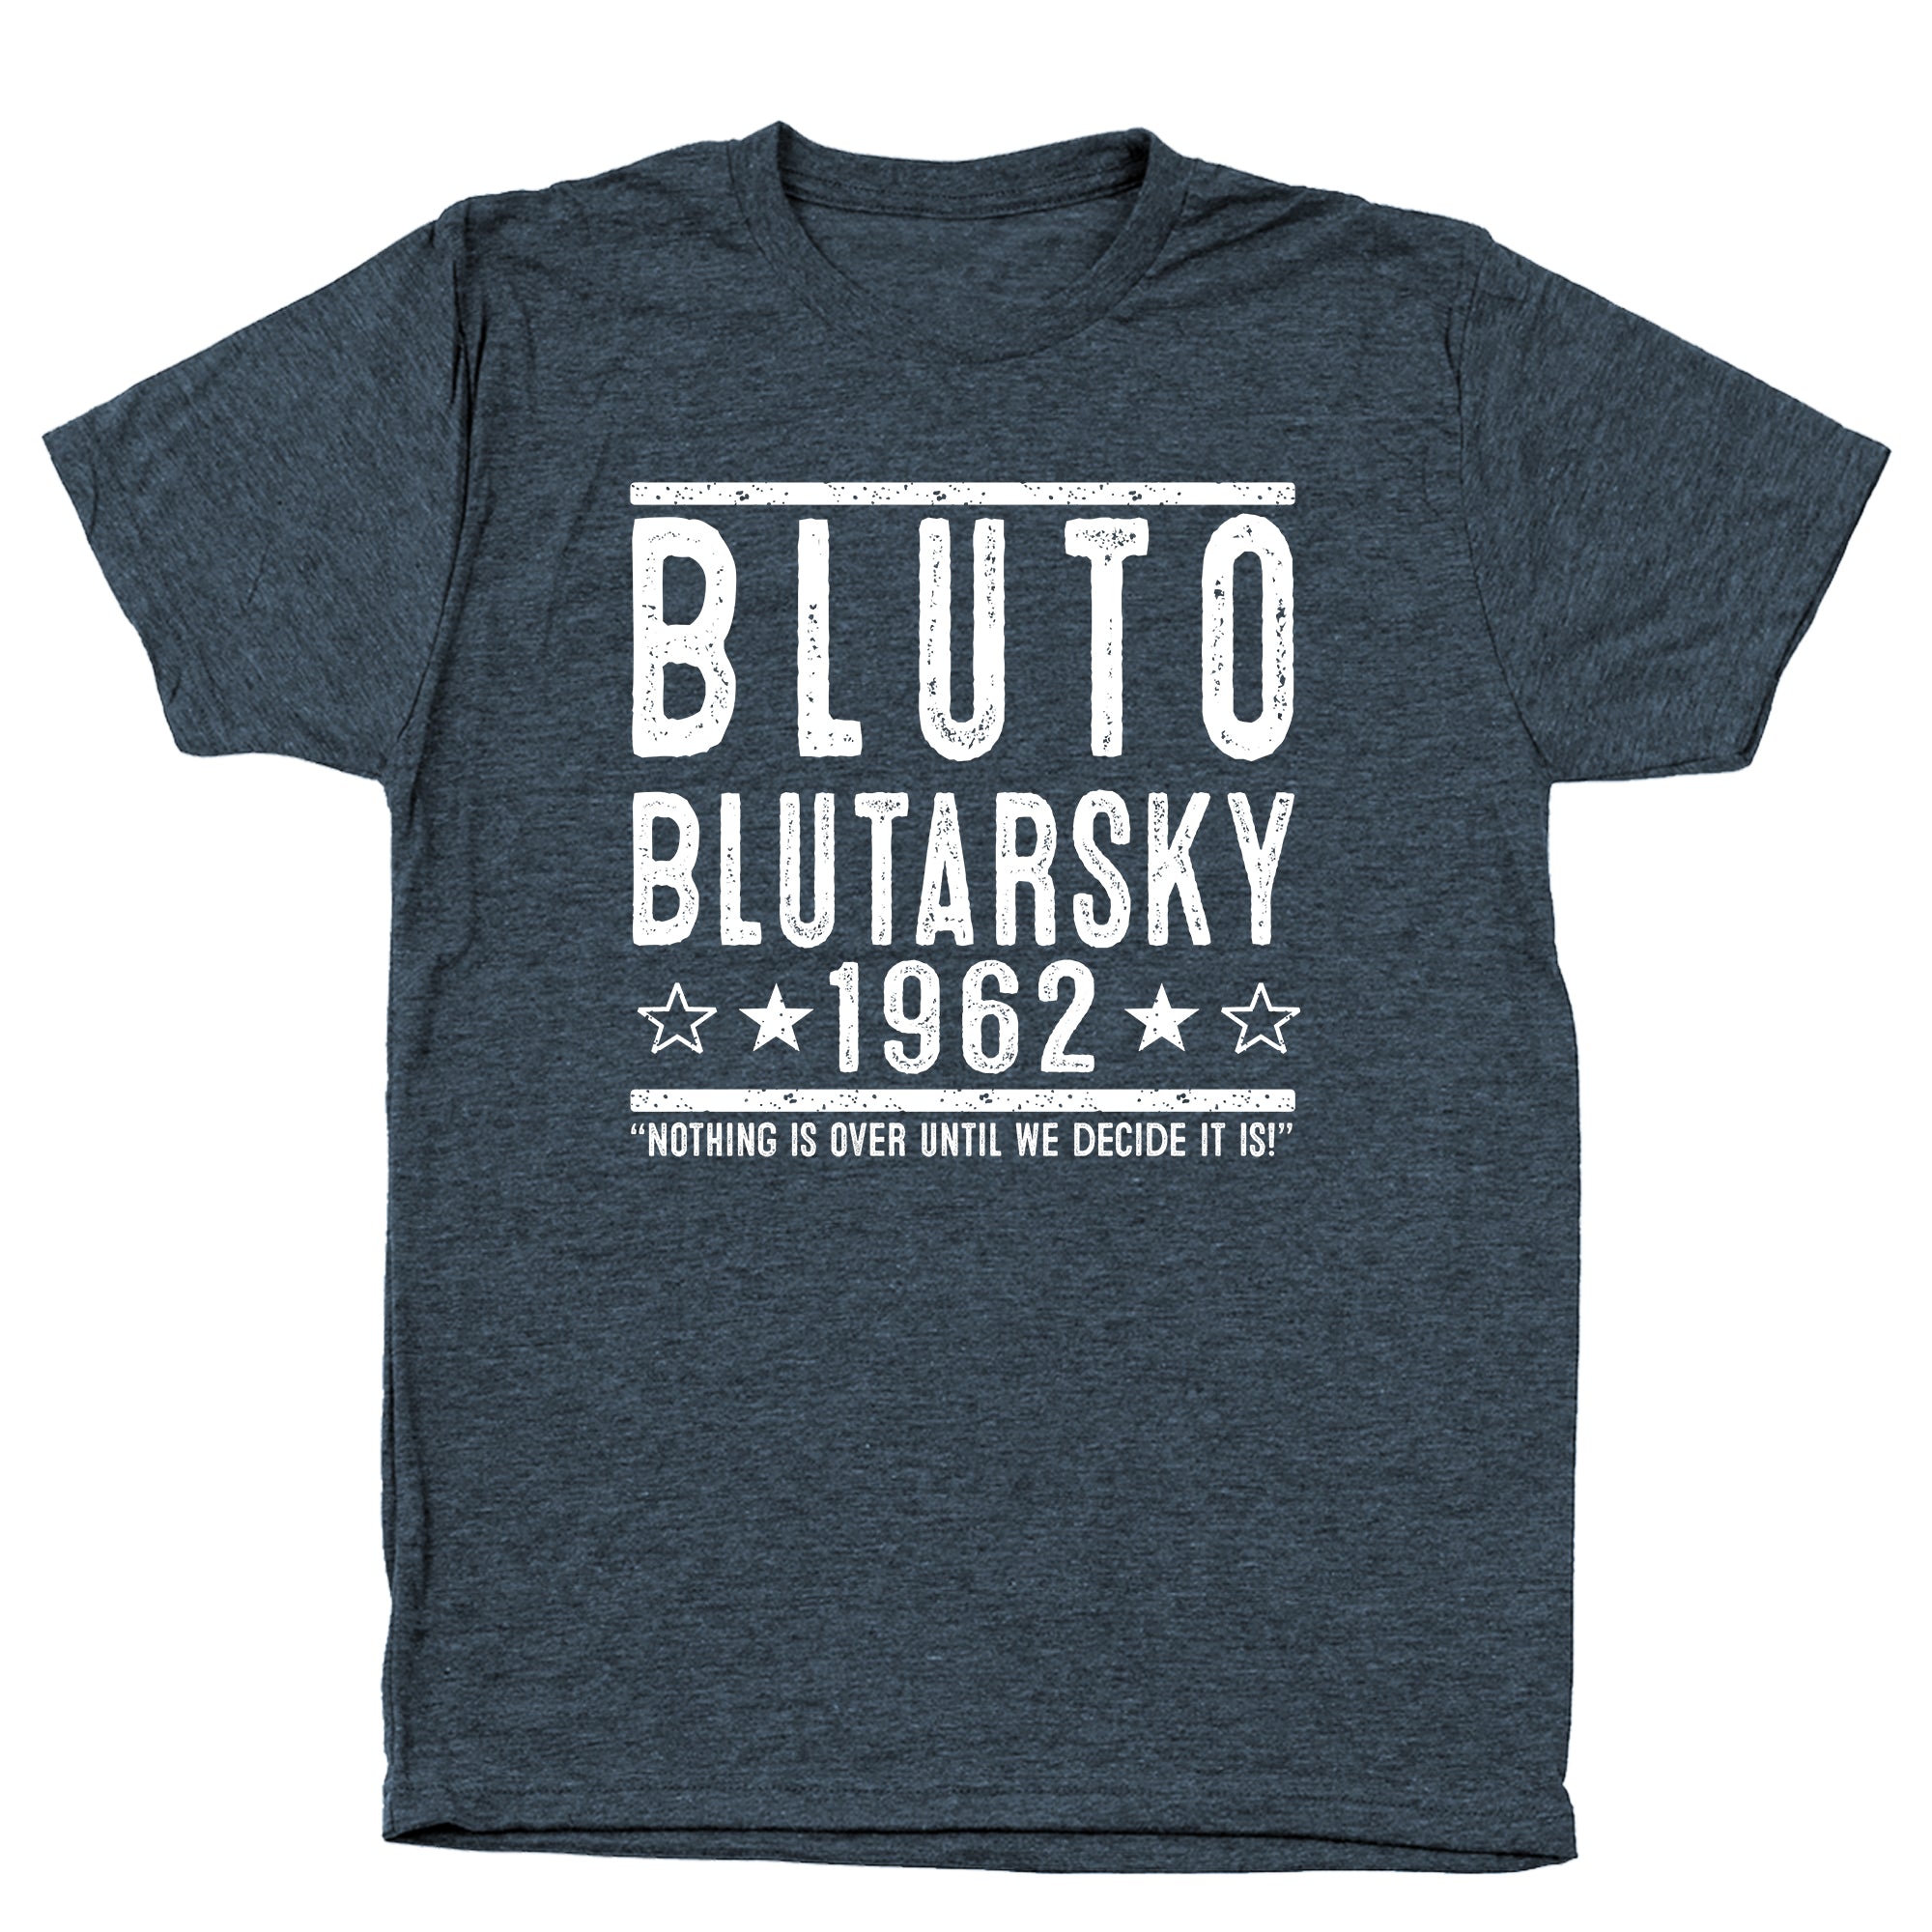 Bluto Blutarsky 1962 Election Tshirt - Donkey Tees